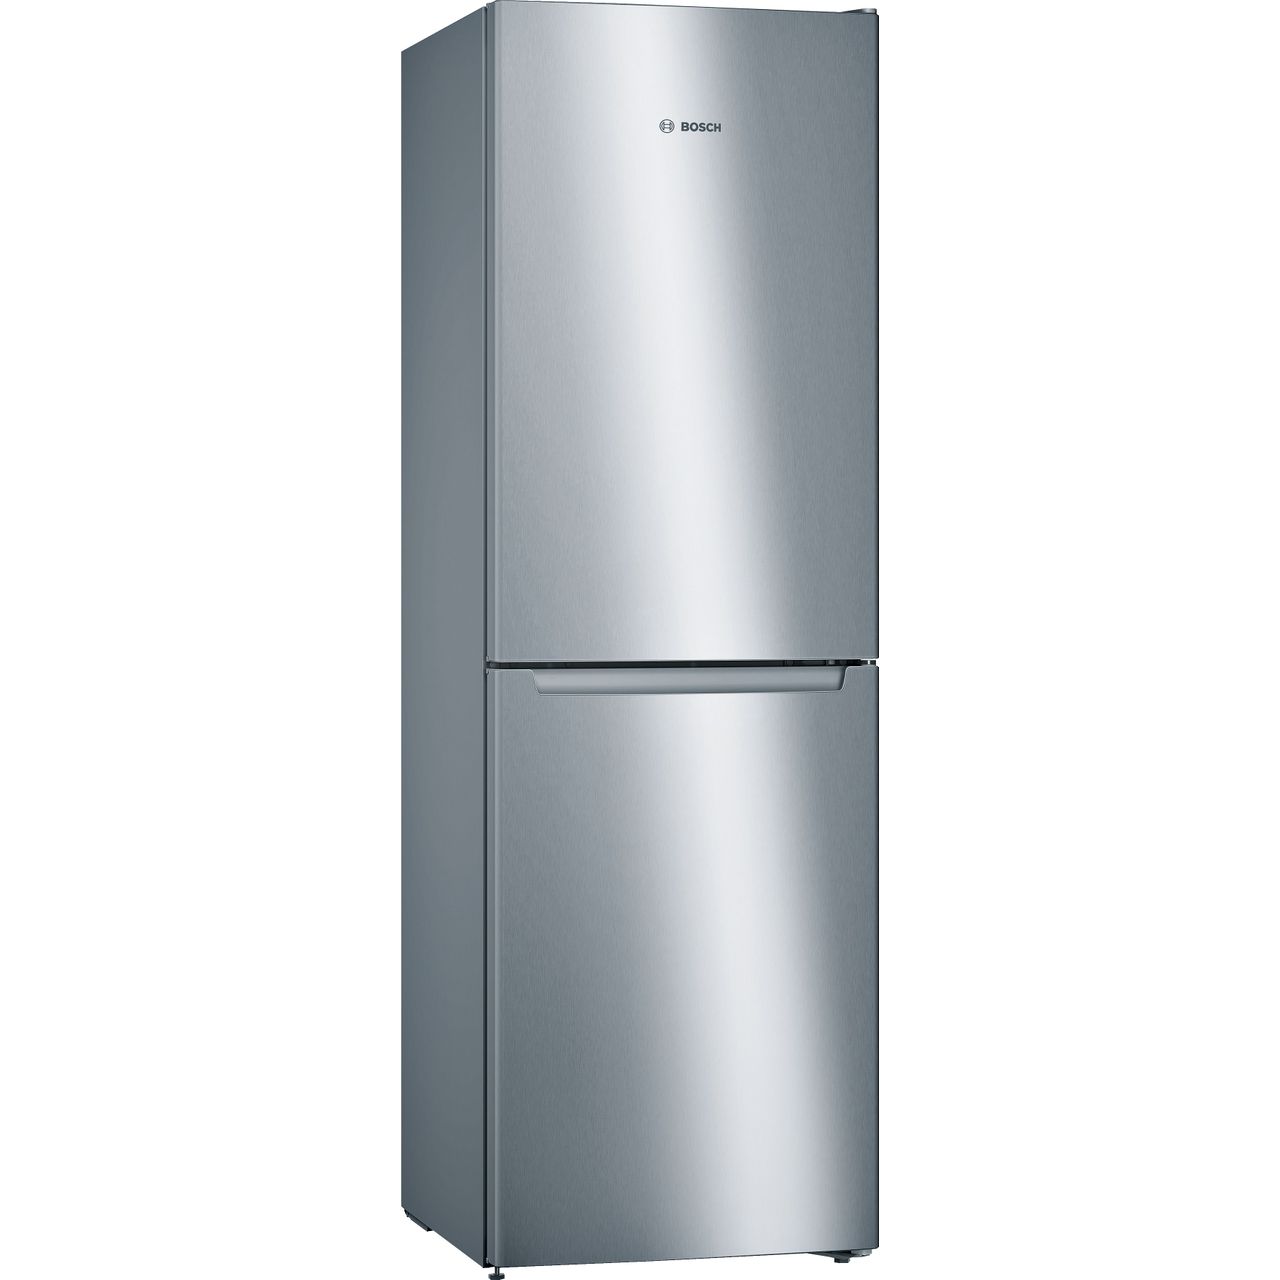 Bosch Serie 2 KGN34NLEAG 50/50 Frost Free Fridge Freezer Review